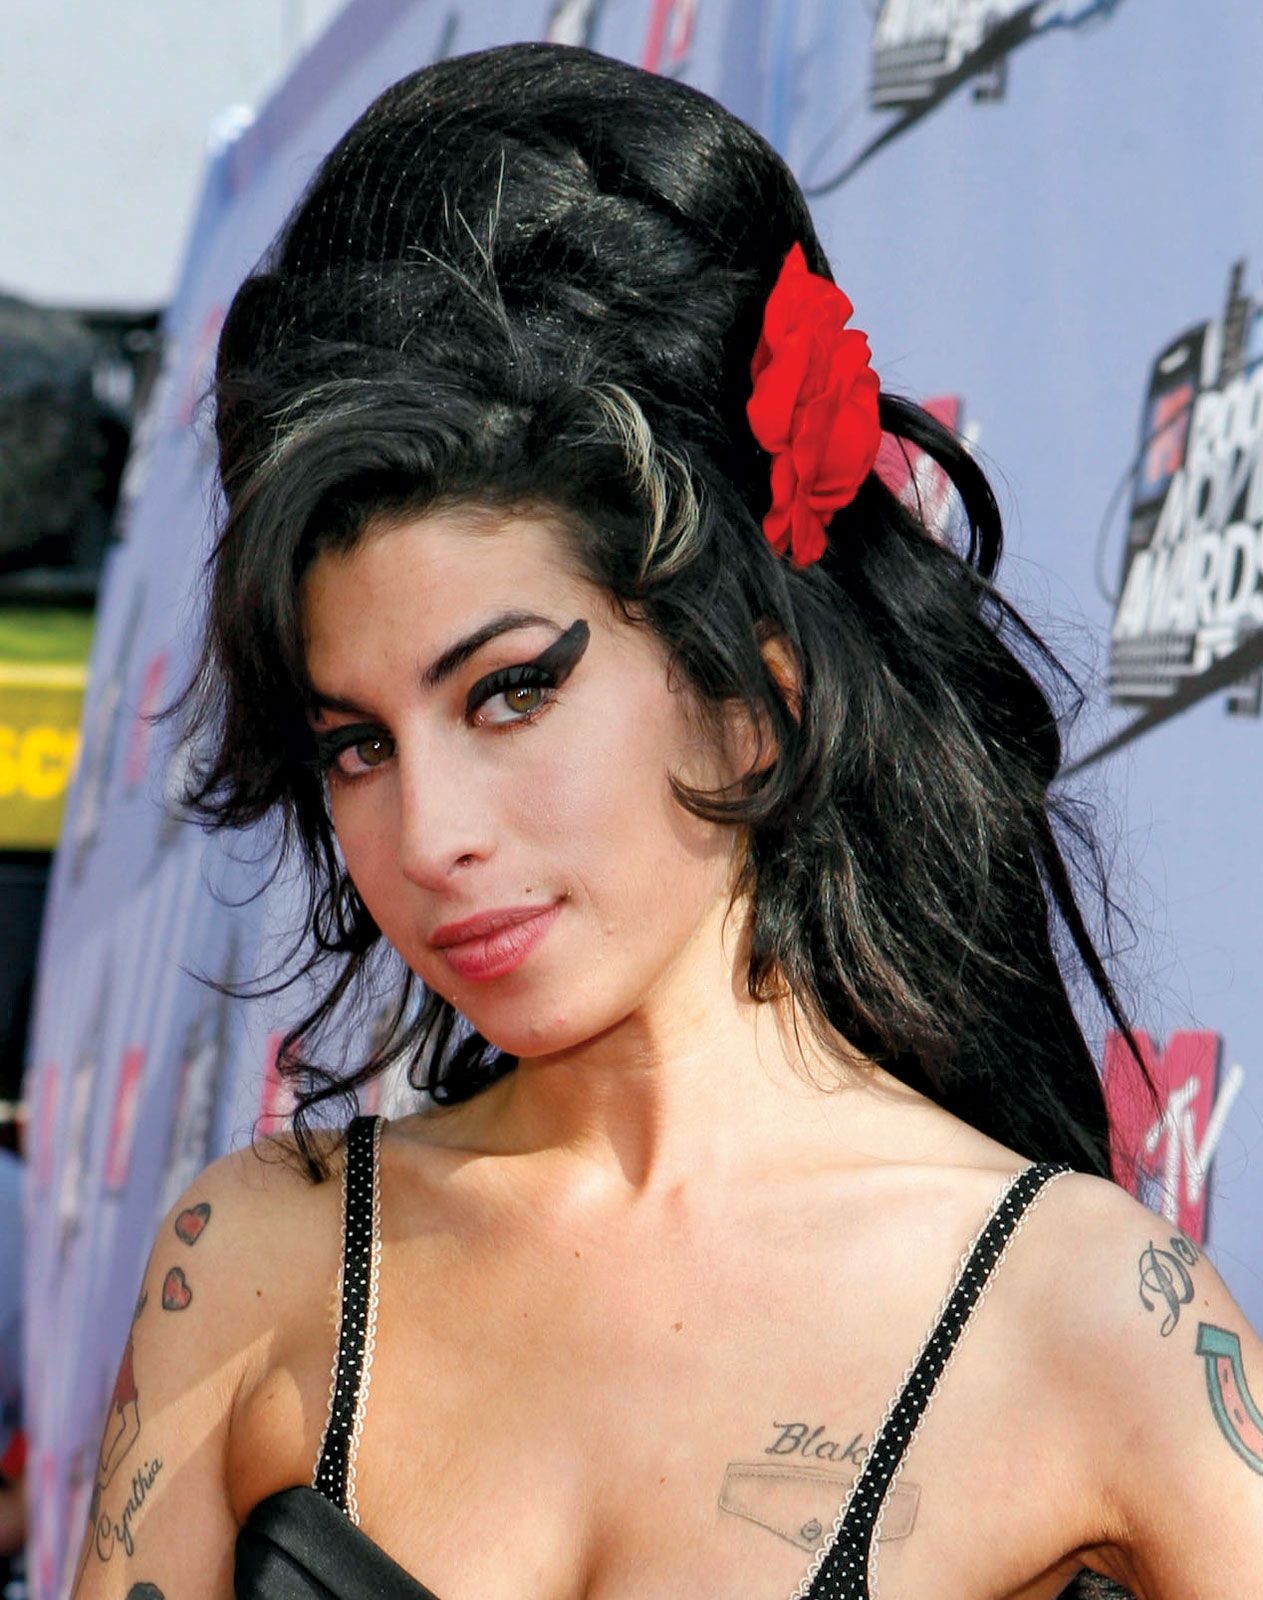  Biografie van Amy Winehouse